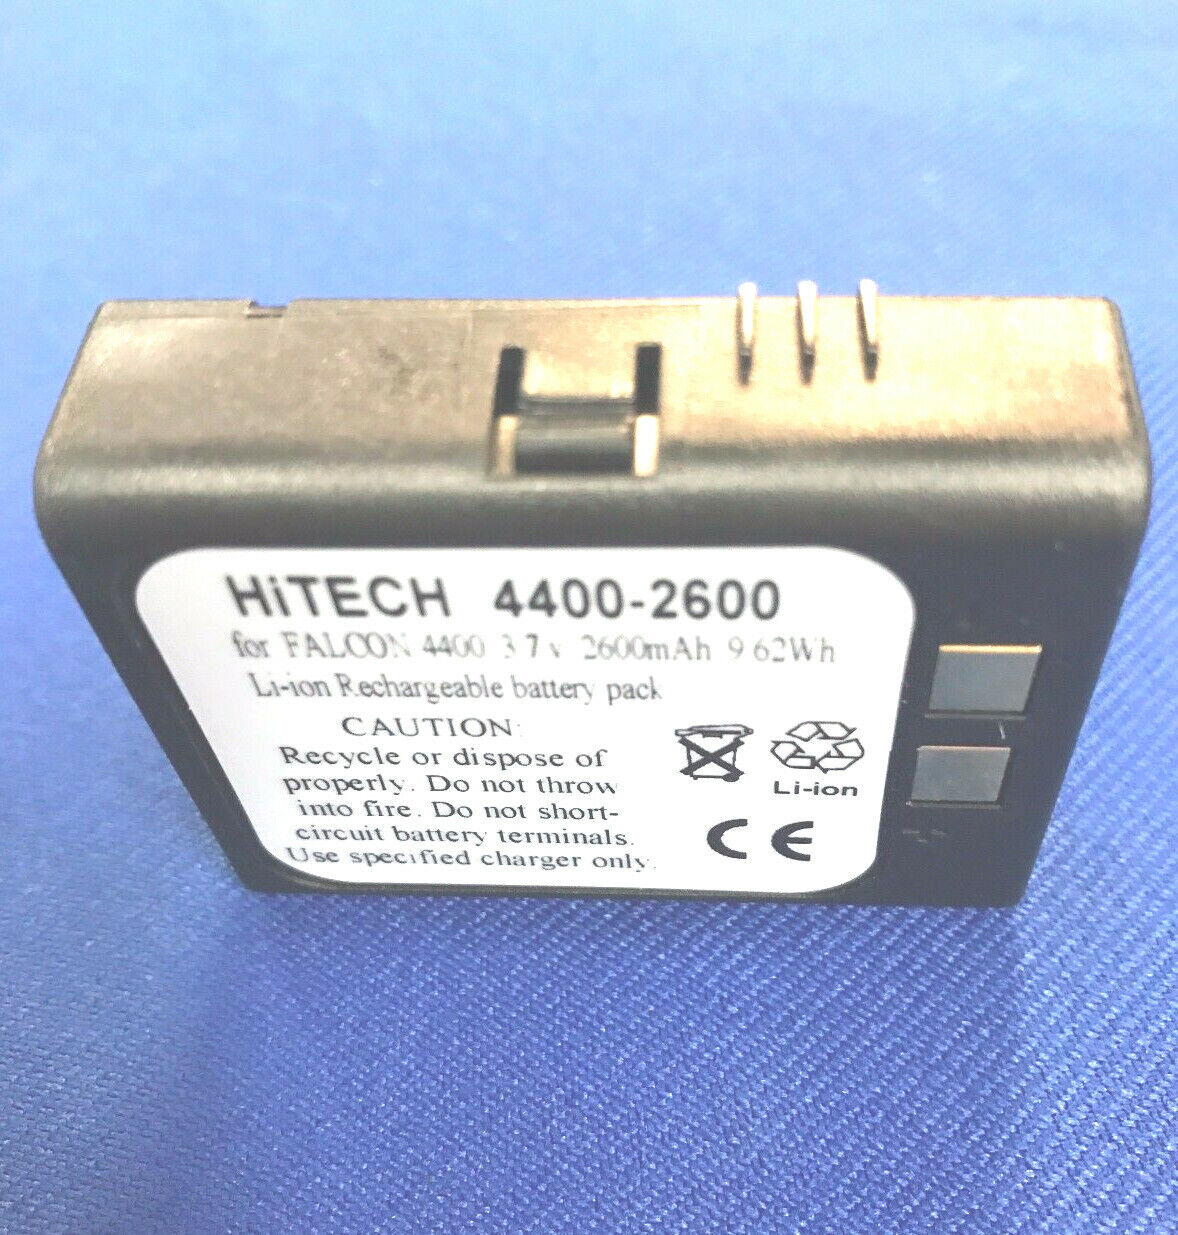 20 Batteries Hitech PSC Cheap mail order sales Datalogic Falcon 2150 Lowest price challenge 4400 Percon#110023